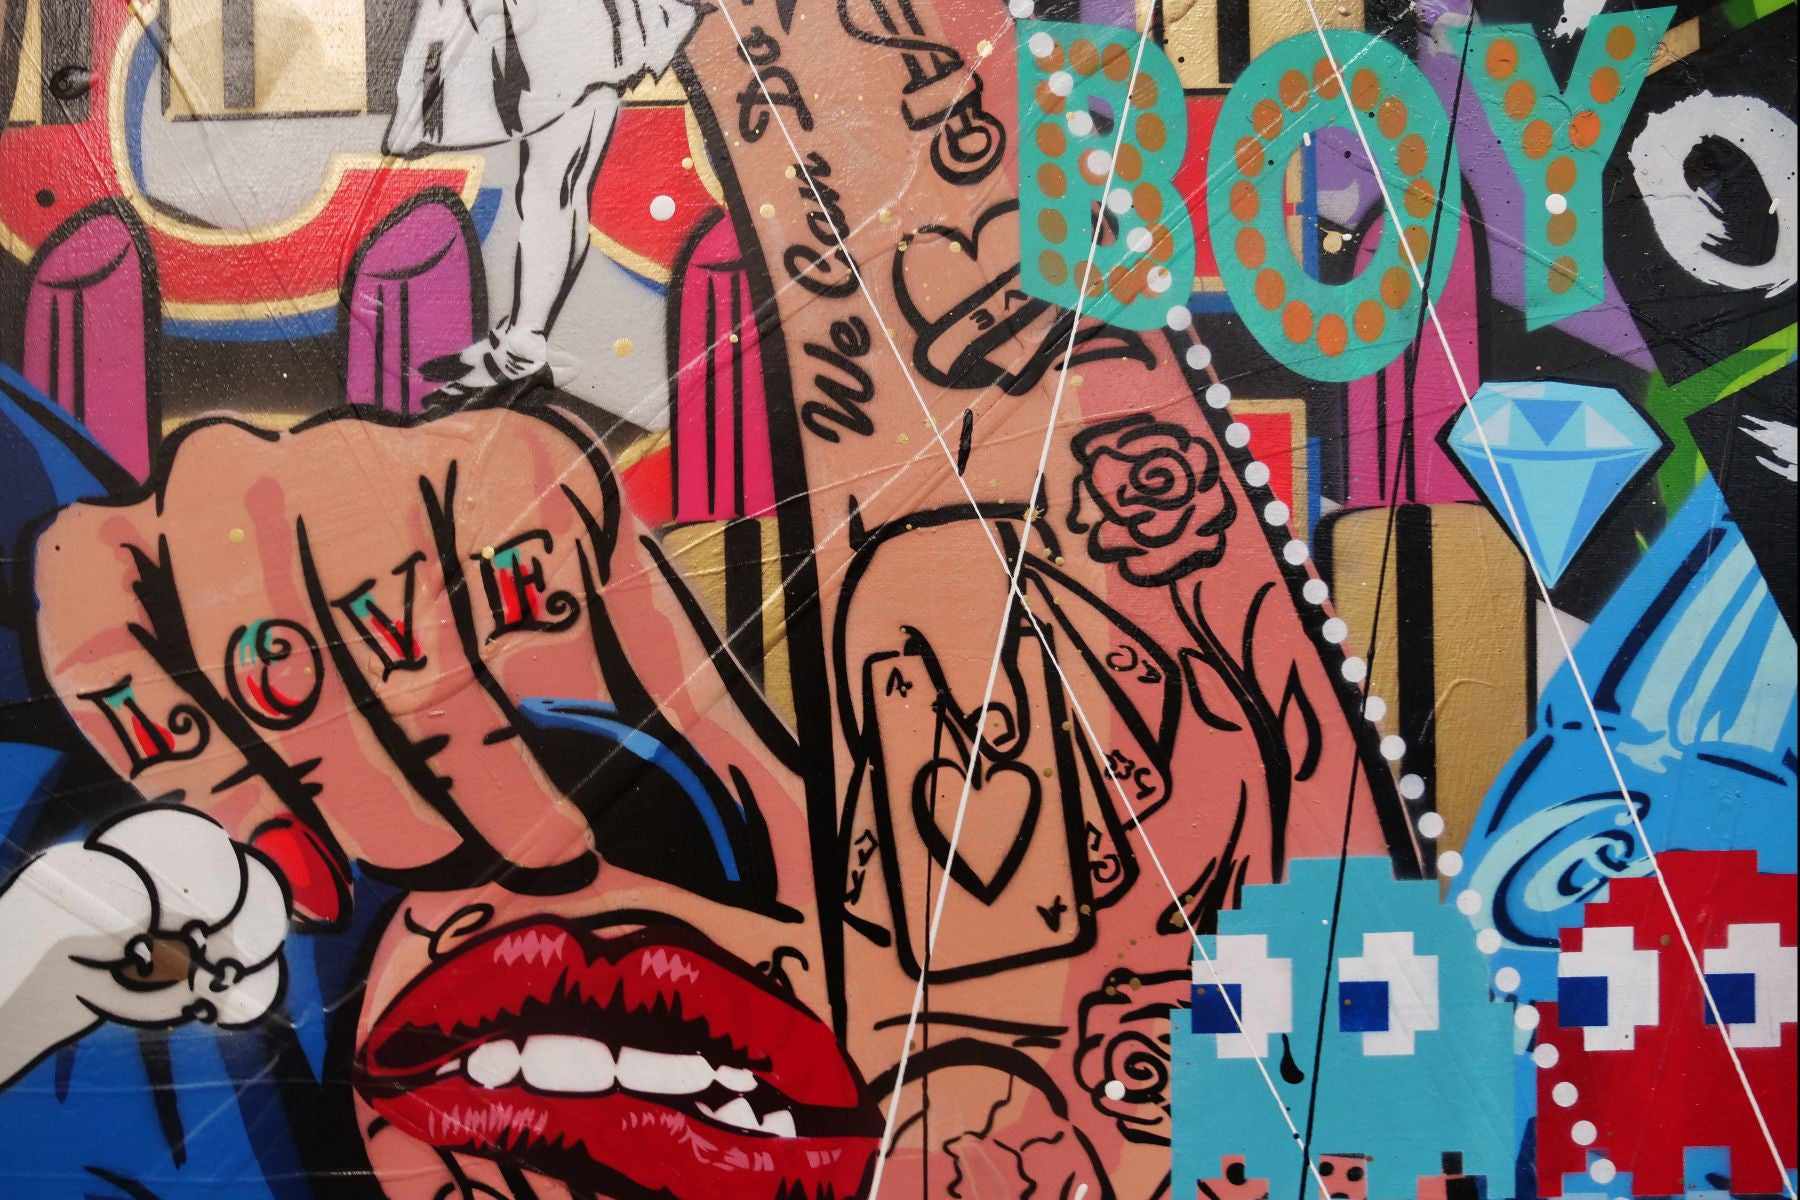 Lady Luck Rosie 190cm x 100cm Rosie The Riveter Textured Urban Pop Art Painting (SOLD)